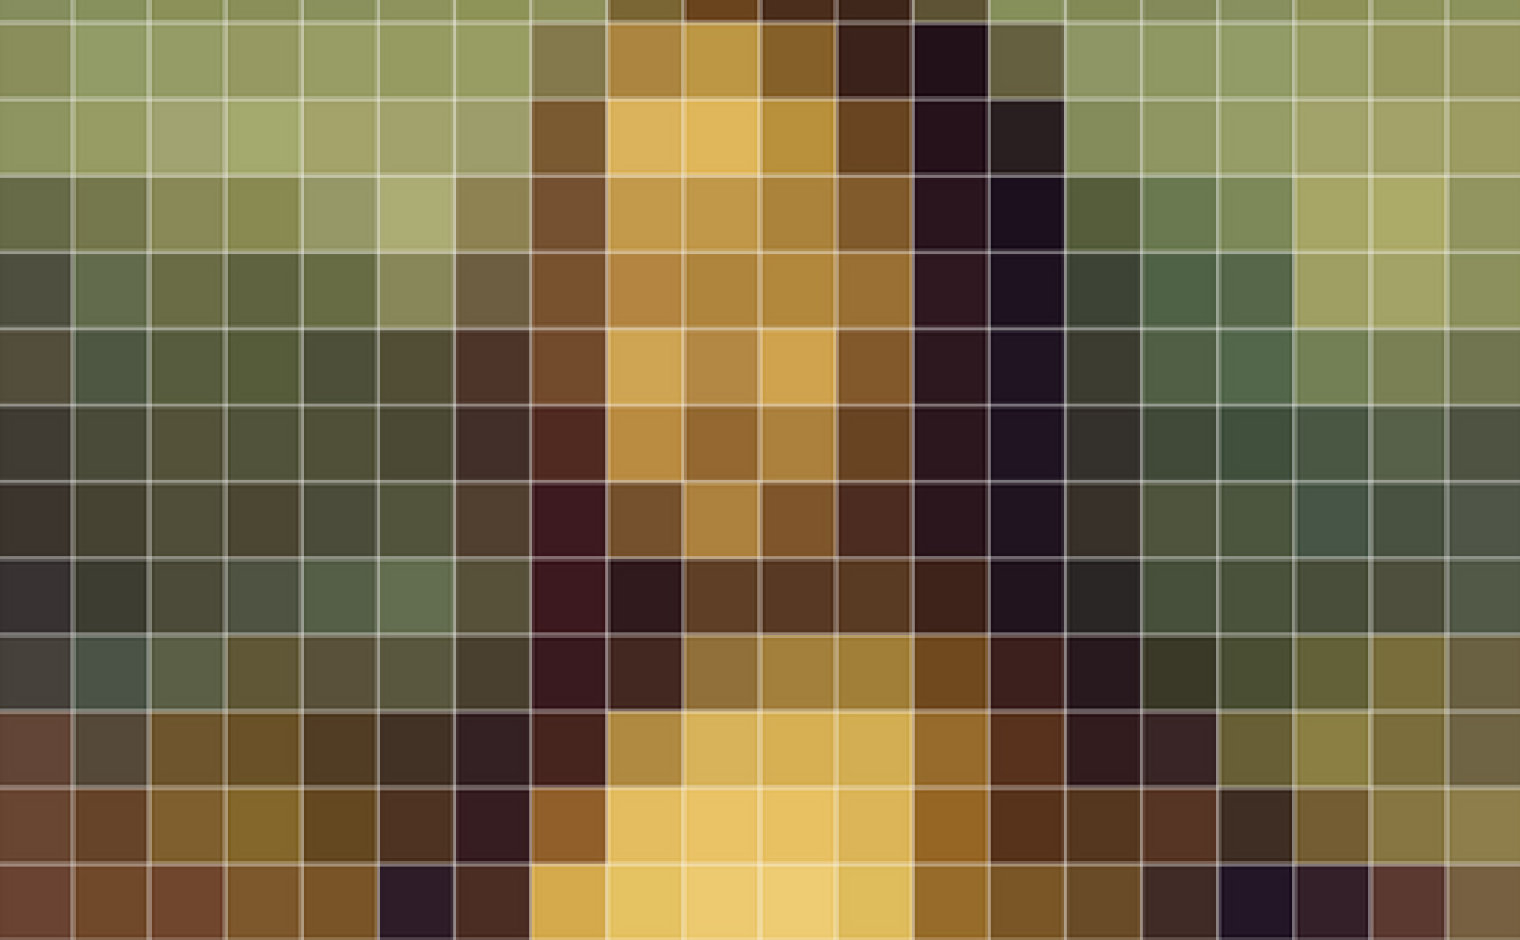 Mona Lisa in pixels